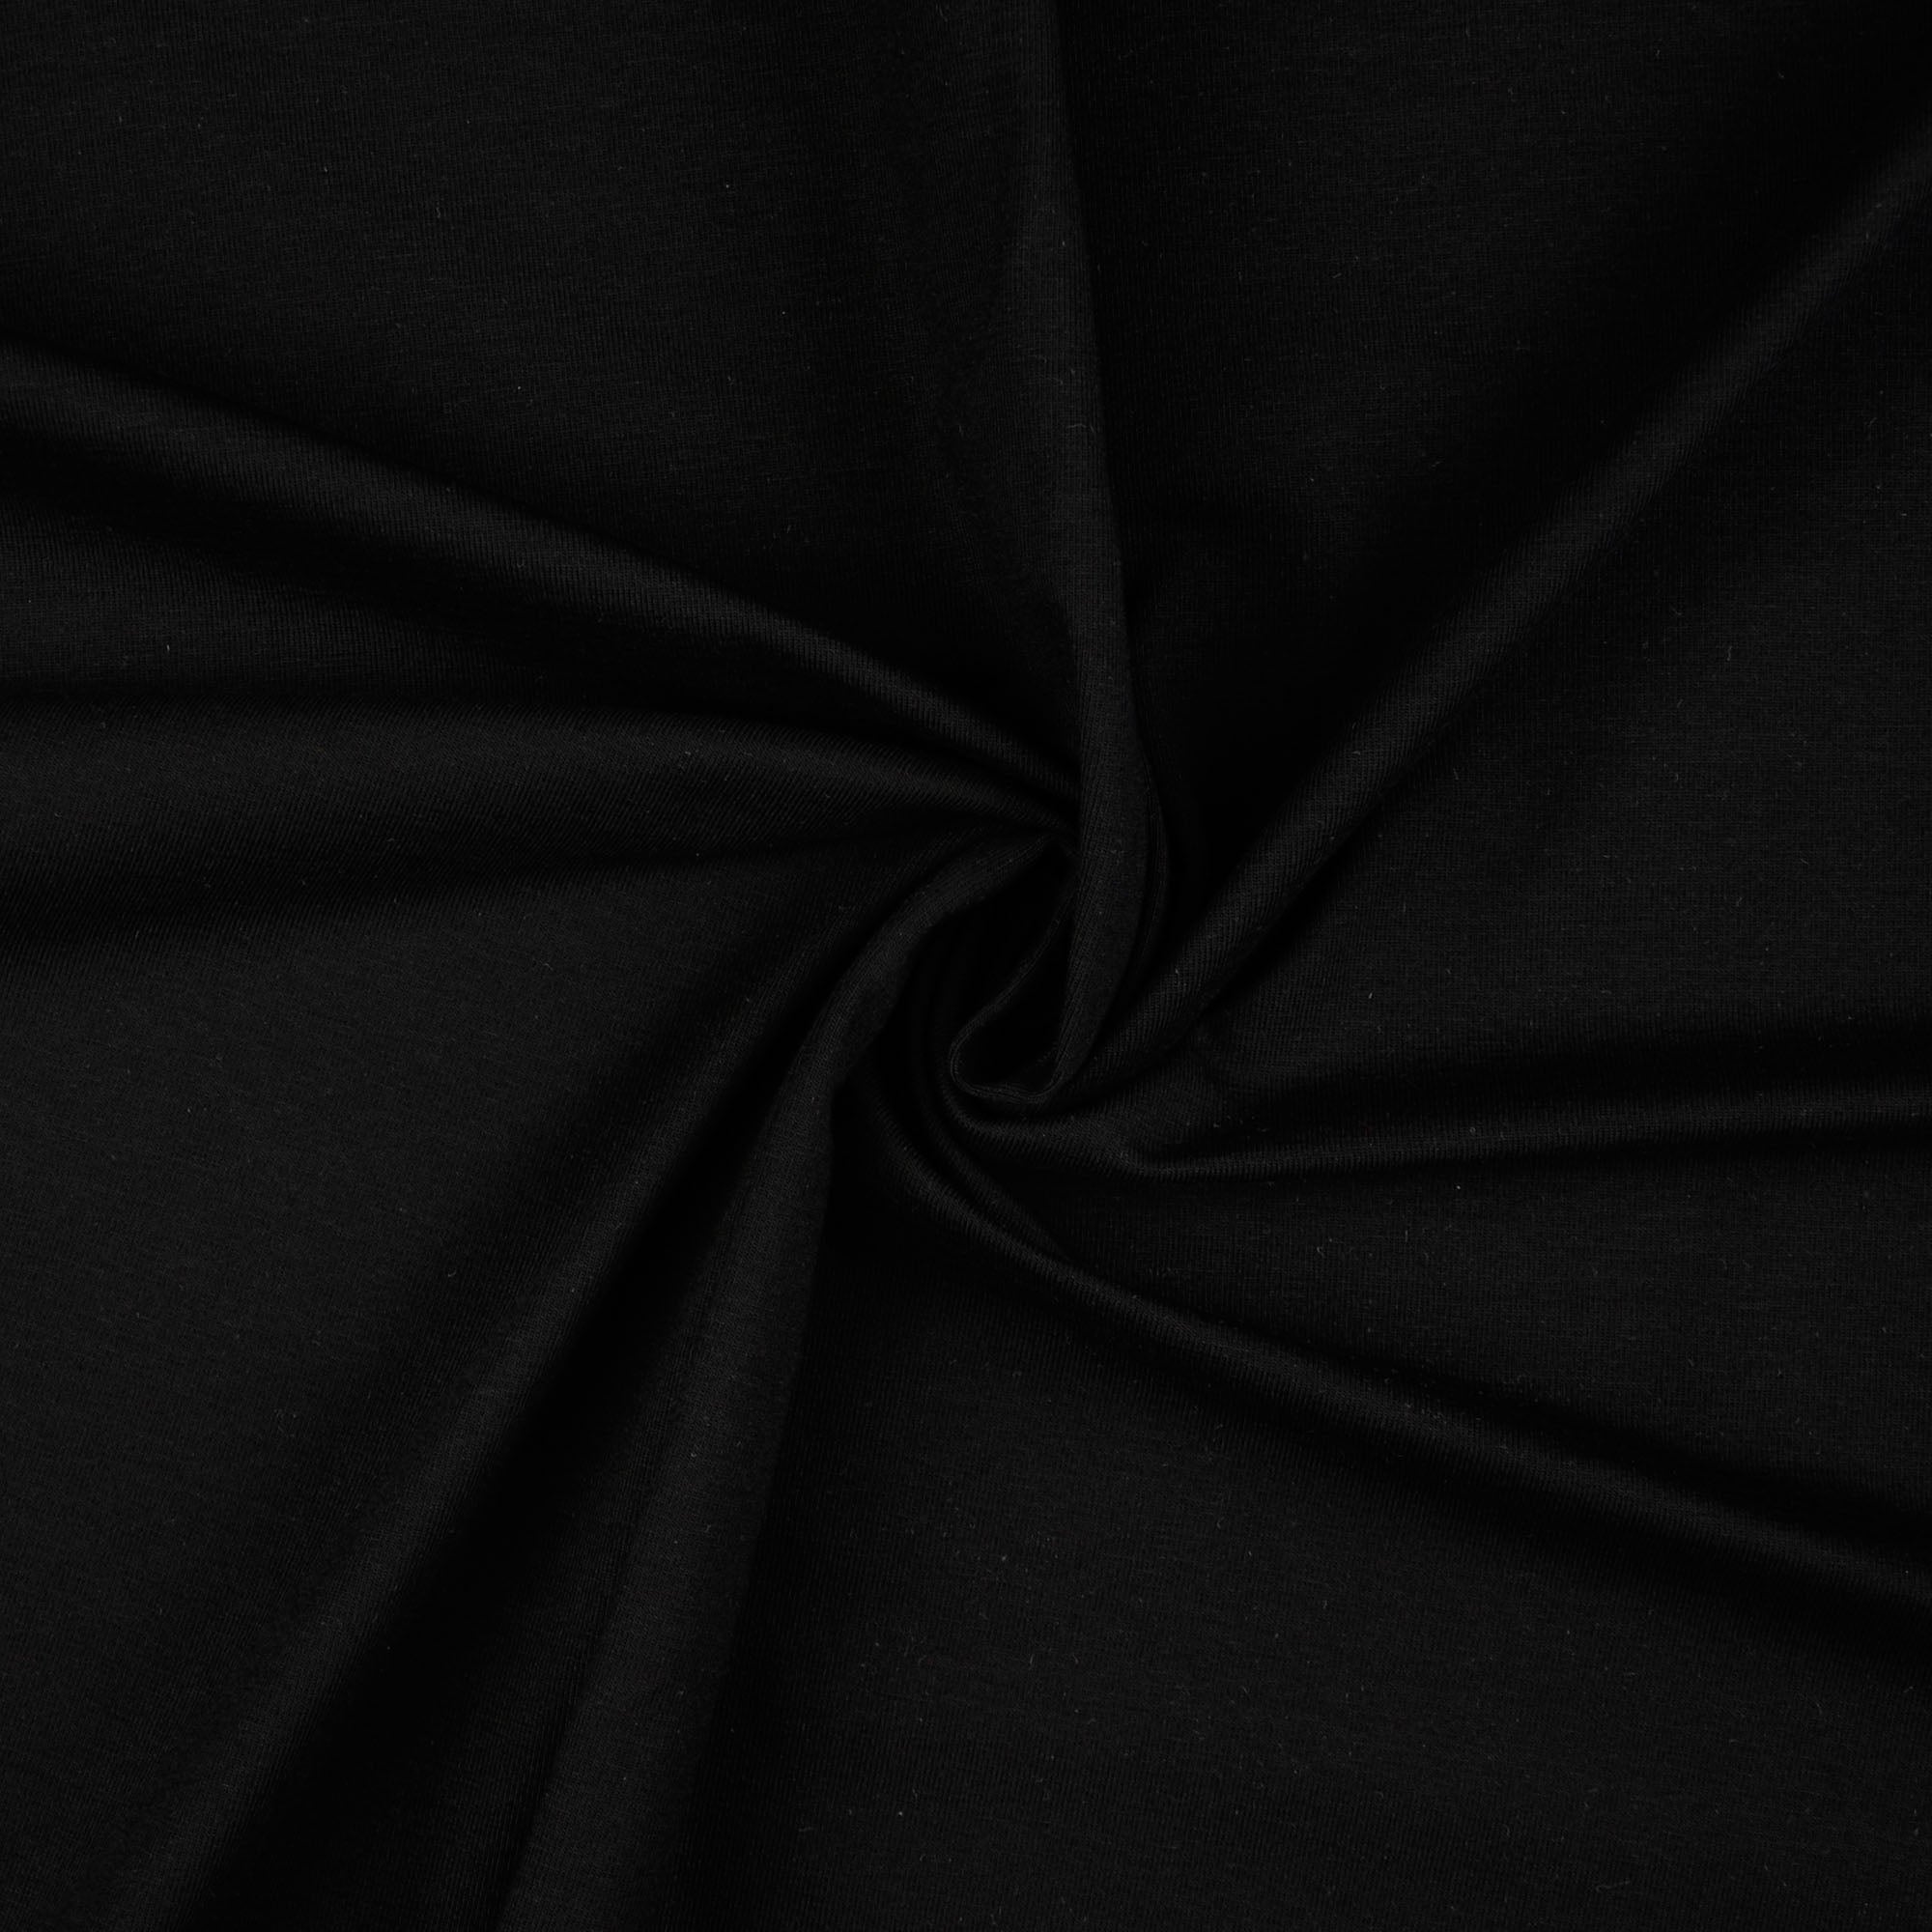 Essential Chic Black Plain Cotton Jersey Fabric